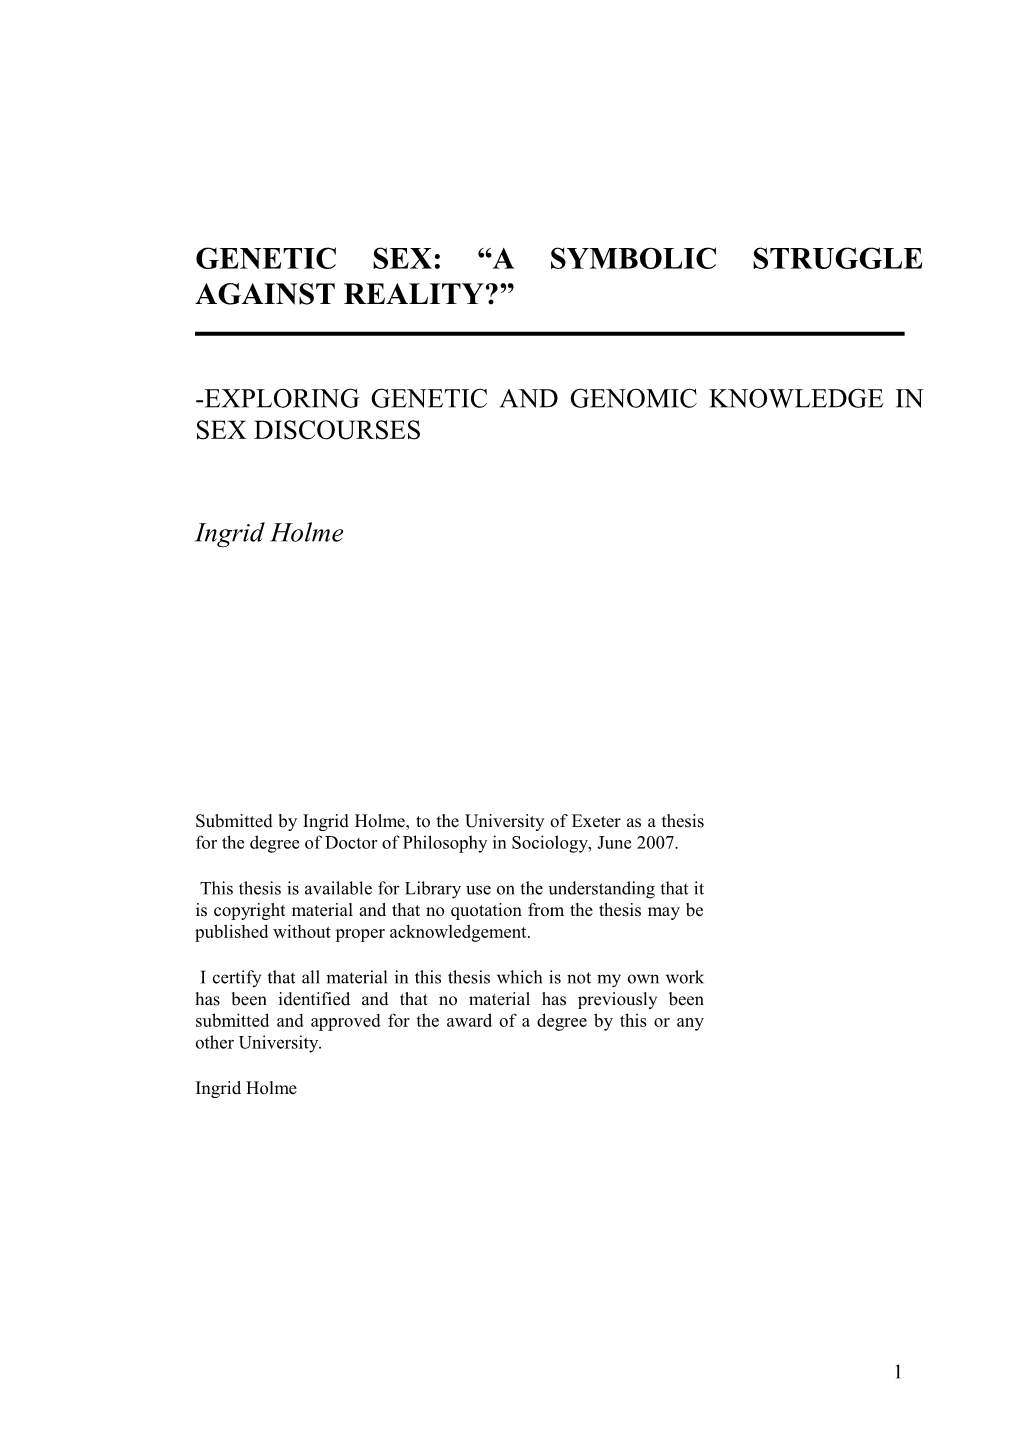 Genetic Sex: “A Symbolic Struggle Against Reality?”